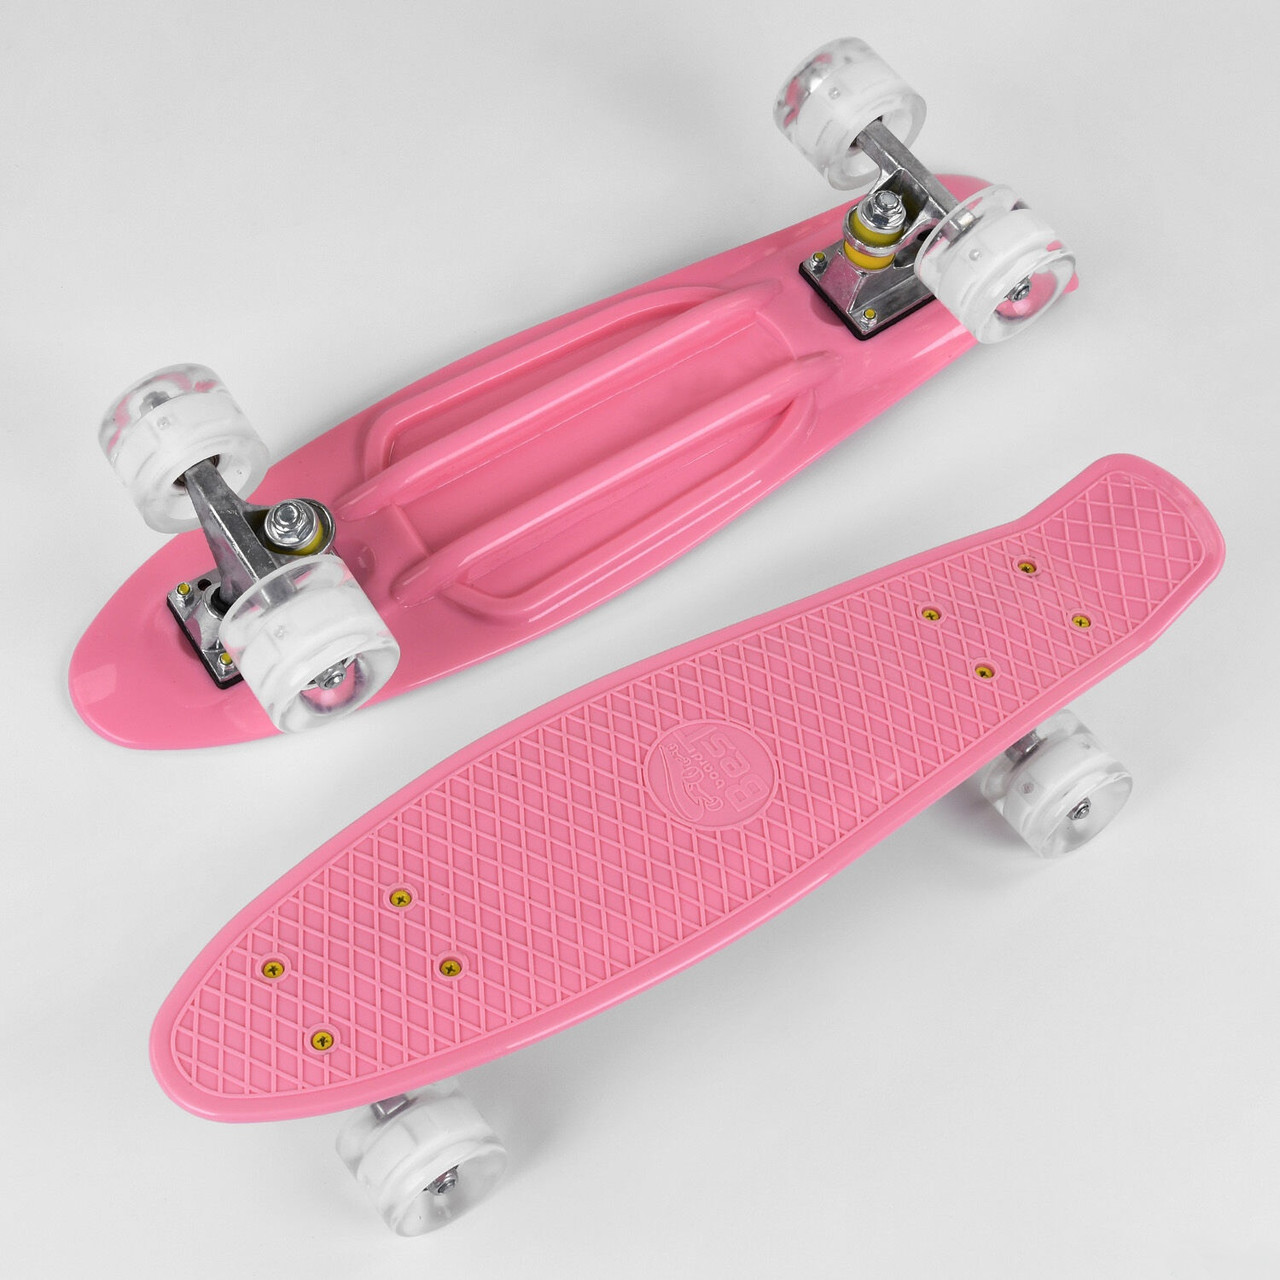 Скейт Пенни борд 2708 Best Board, доска=55см, колёса PU со светом, диаметр 6см (розовый)